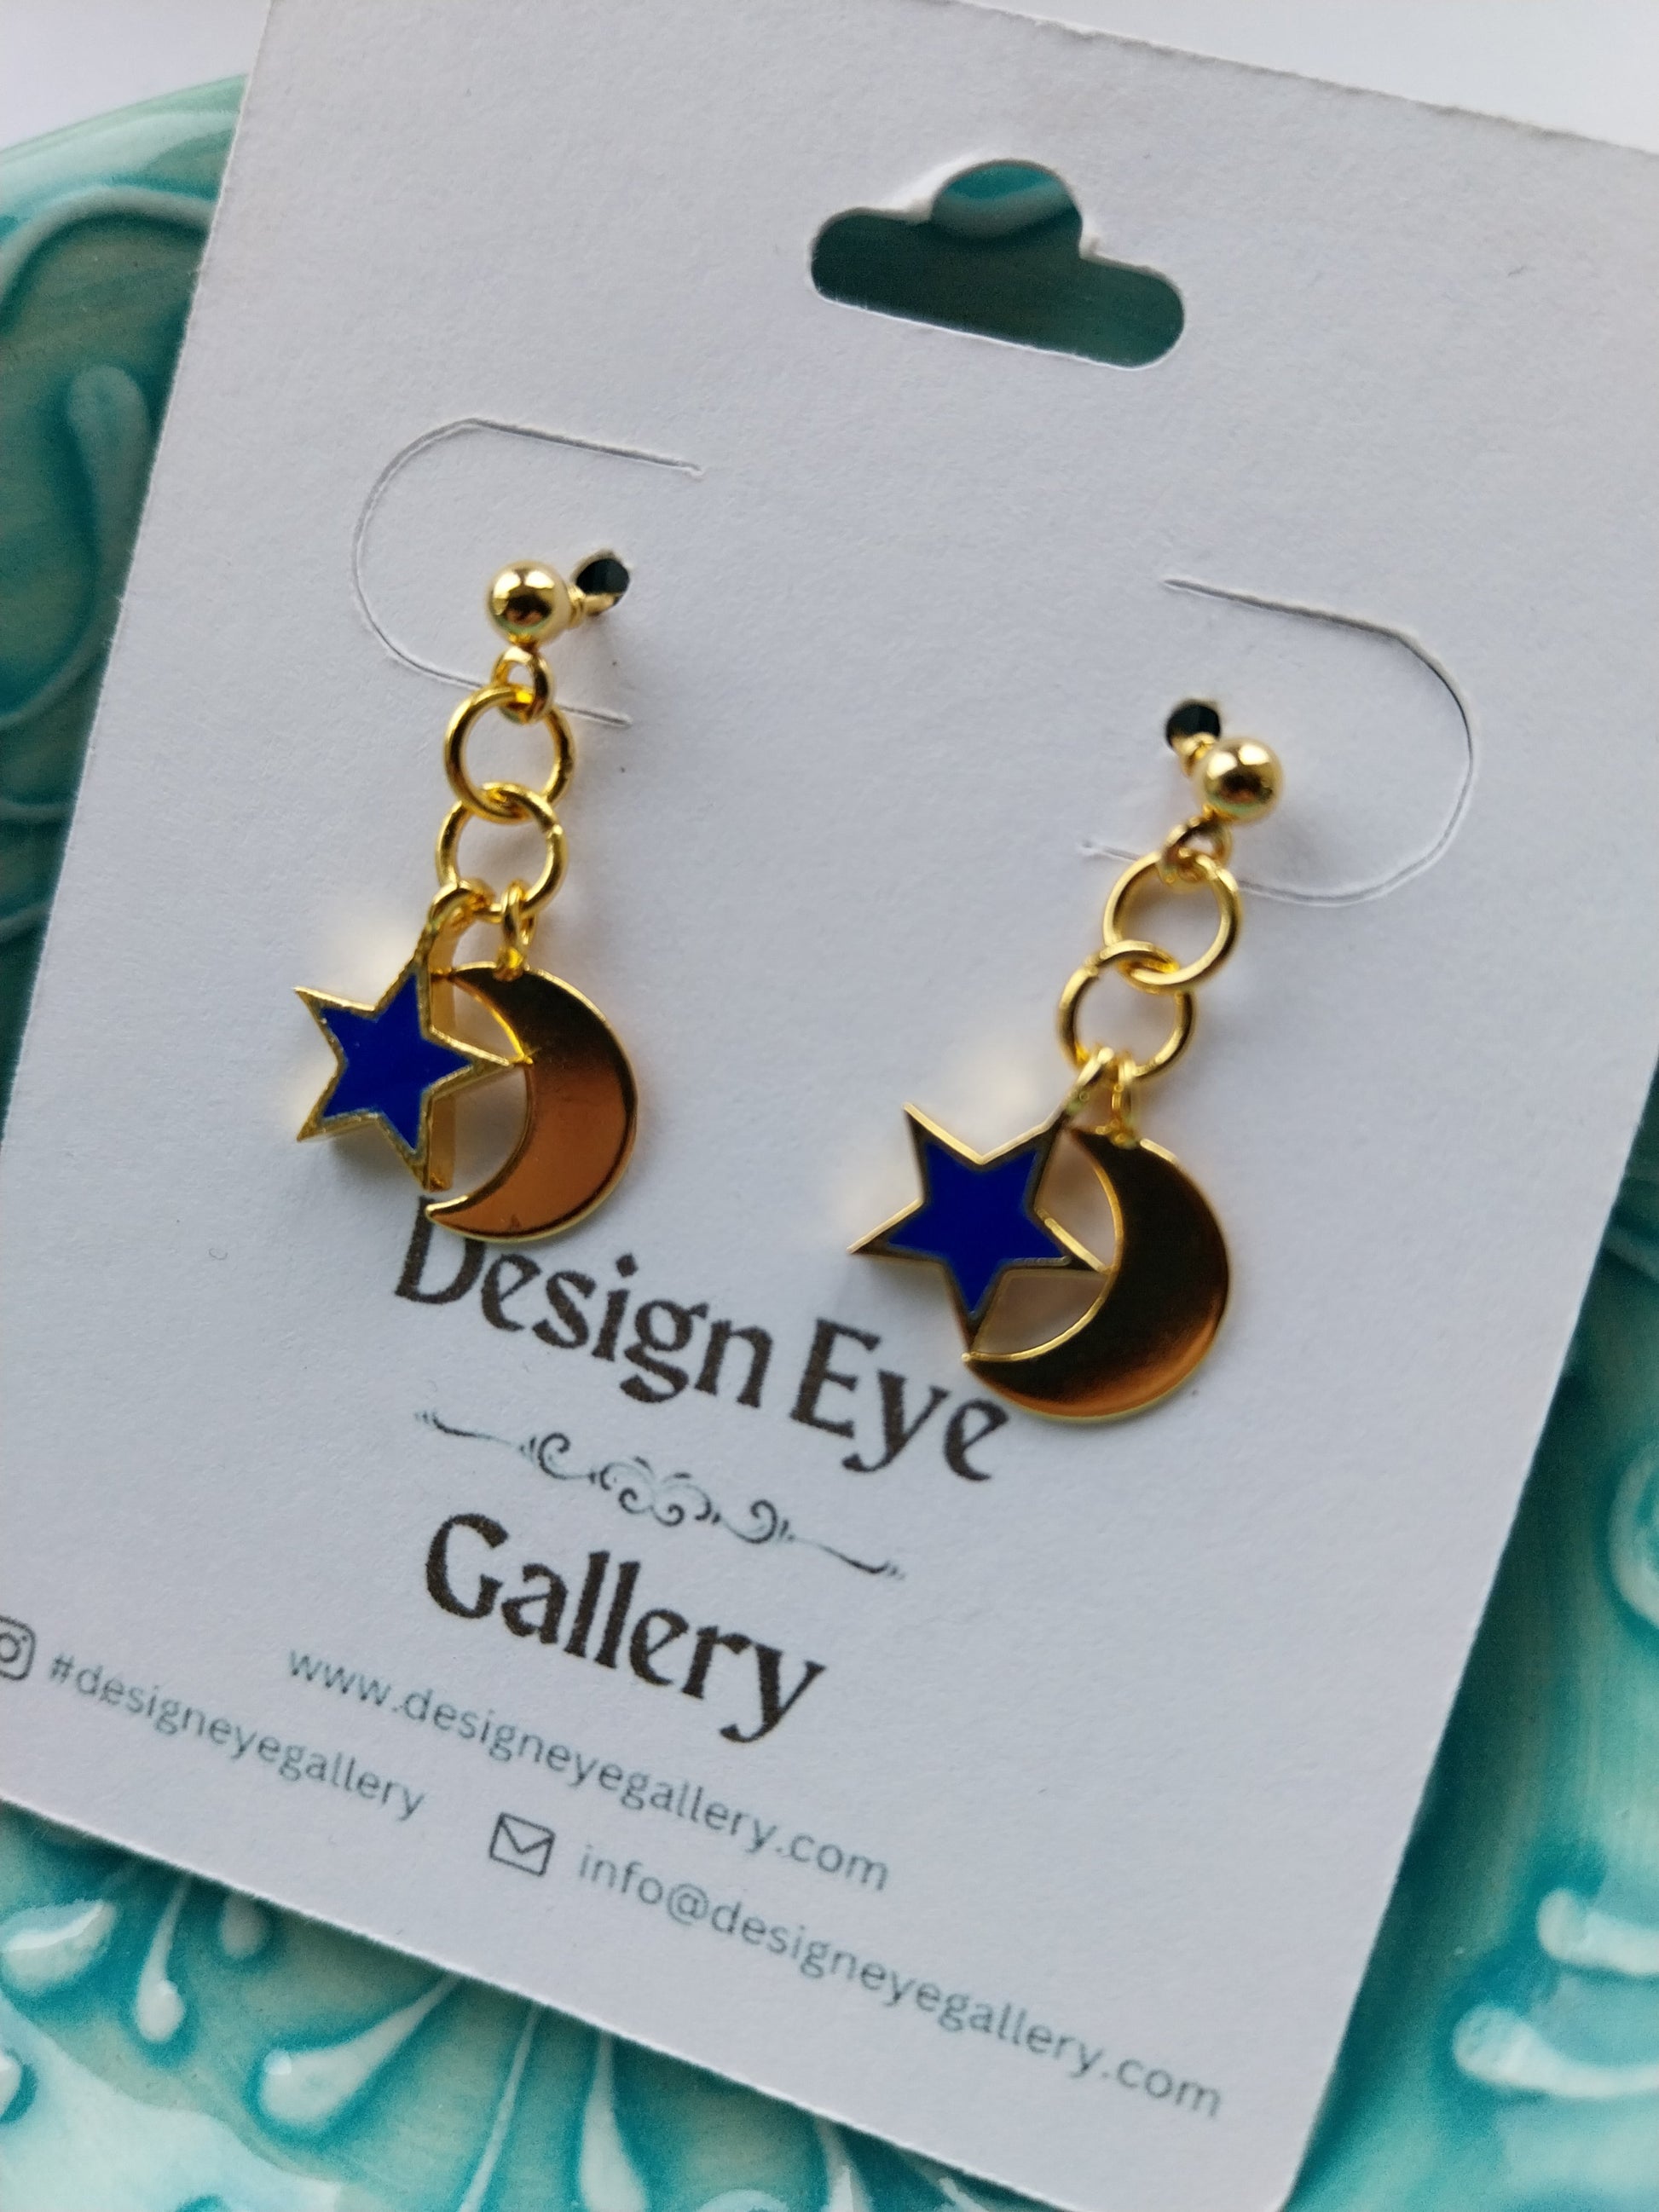 Moon & Star Earrings in Black - design-eye-gallery